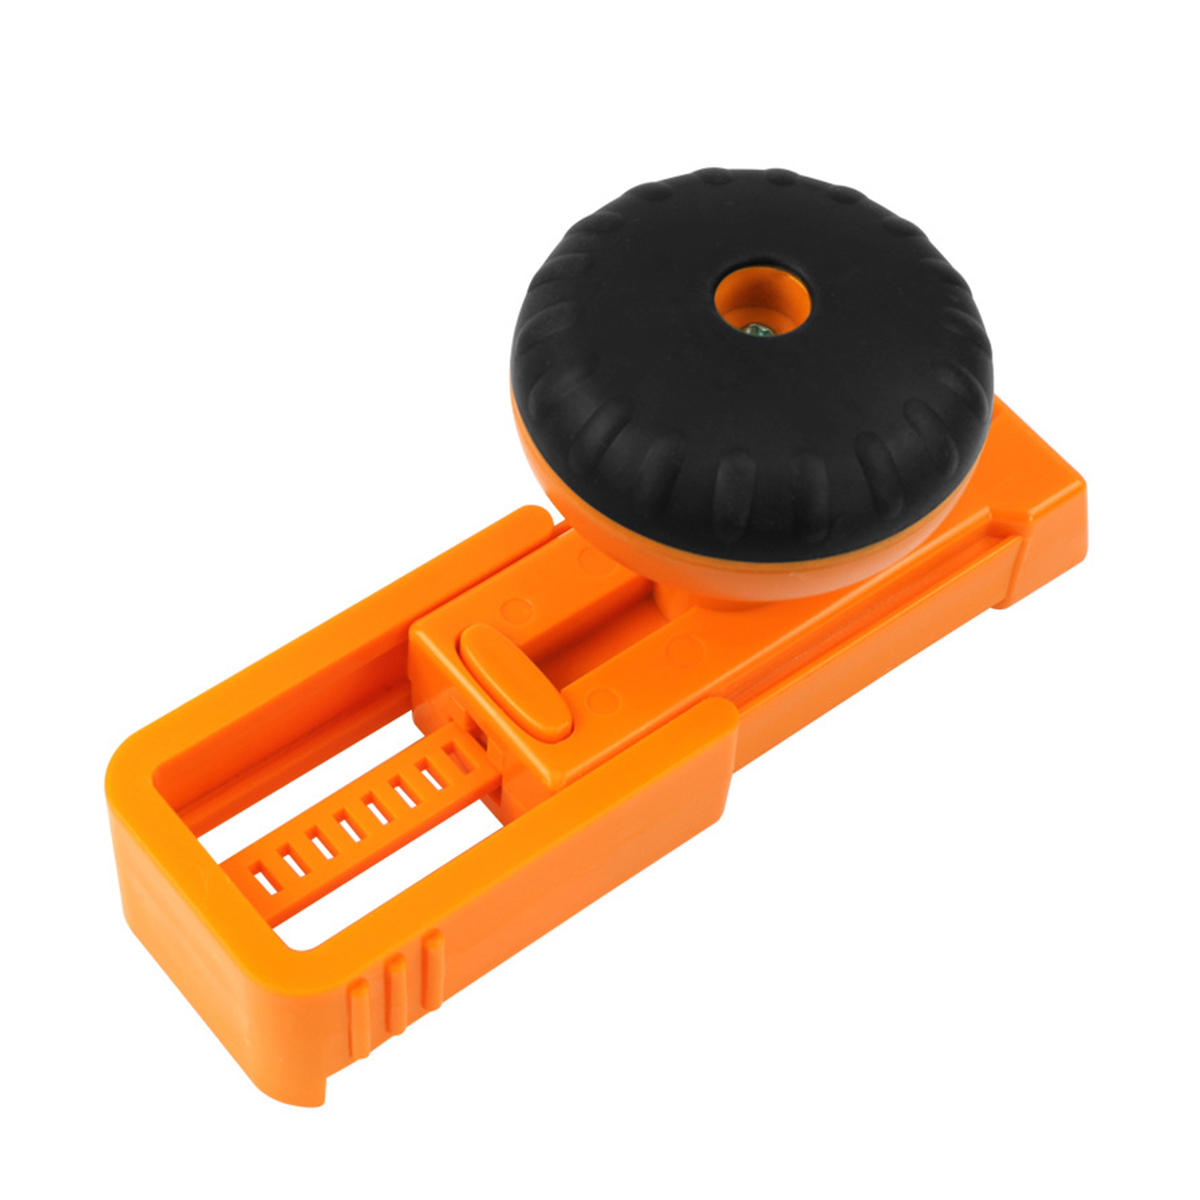 Portable Oblique Hole Locator Positionering Boorgeleider Jig Set voor boren in houtbewerking